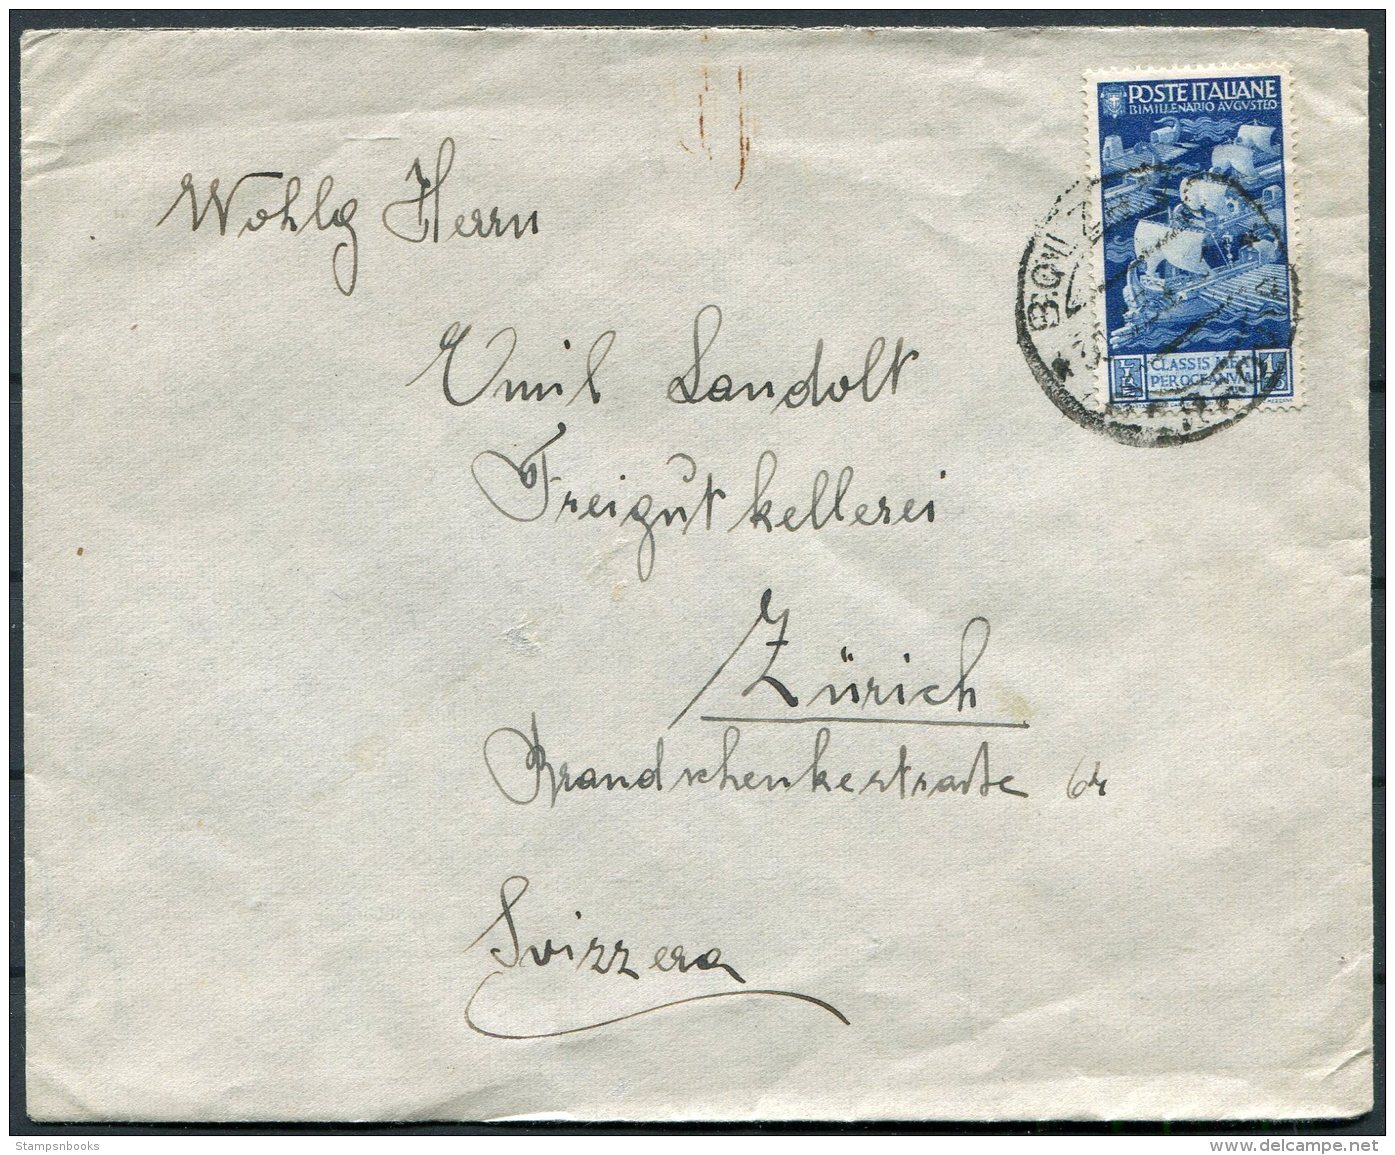 Italy Bolzano Cover - Emile Landolt, Zurch Switzerrland - 1946-60: Poststempel